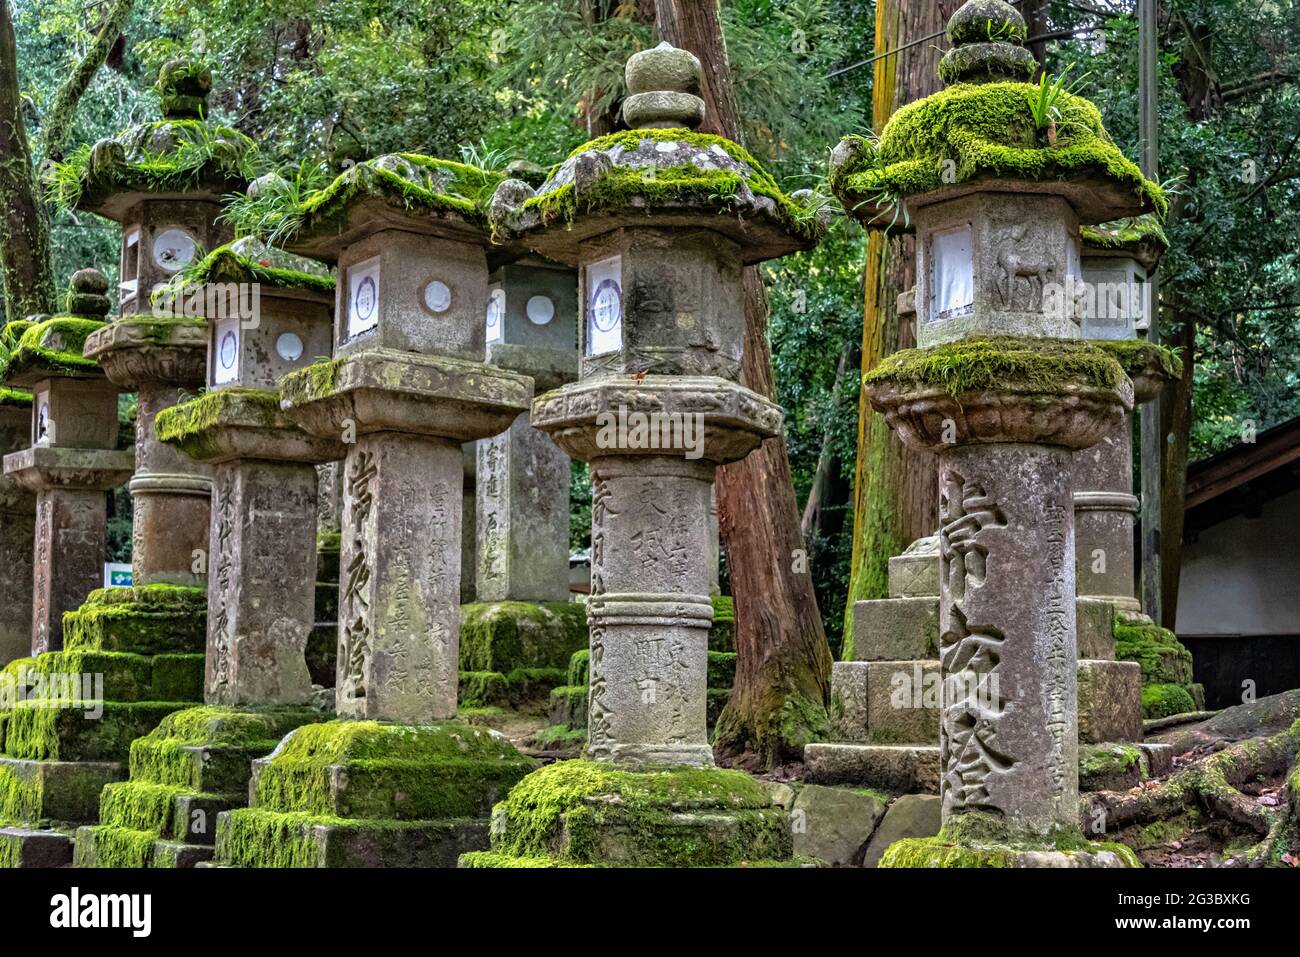 Ishidoro, stone japanese lanterns along the paths of Nara Park, Nara, Japan  Stock Photo - Alamy